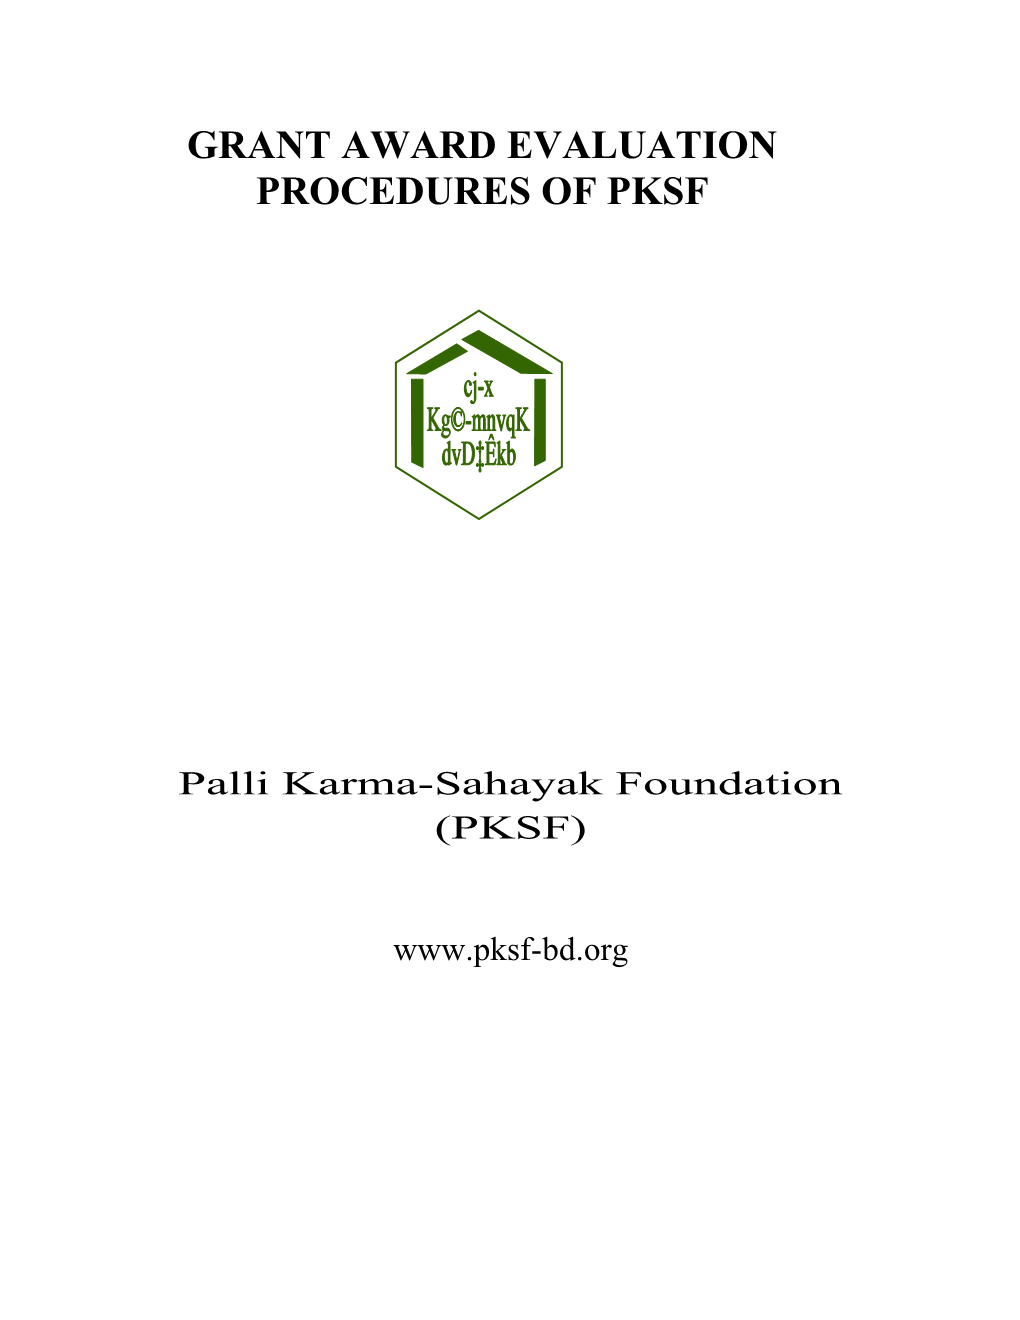 Grant Award Evaluation Procedures of Pksf